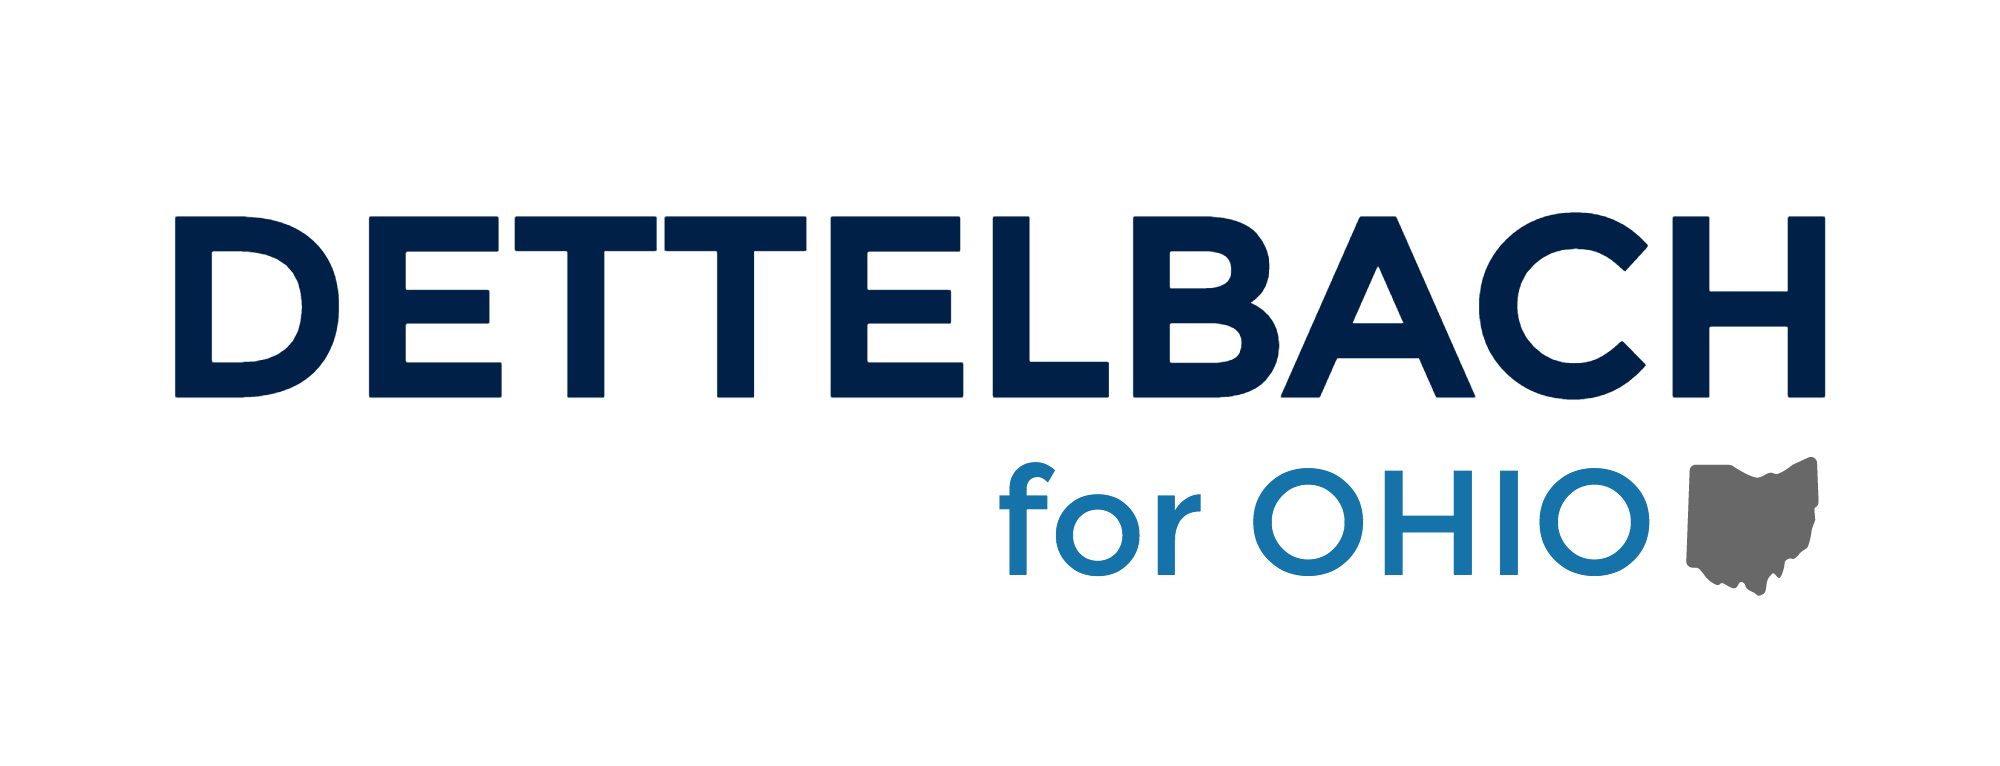 DETTELBACH-logo.png